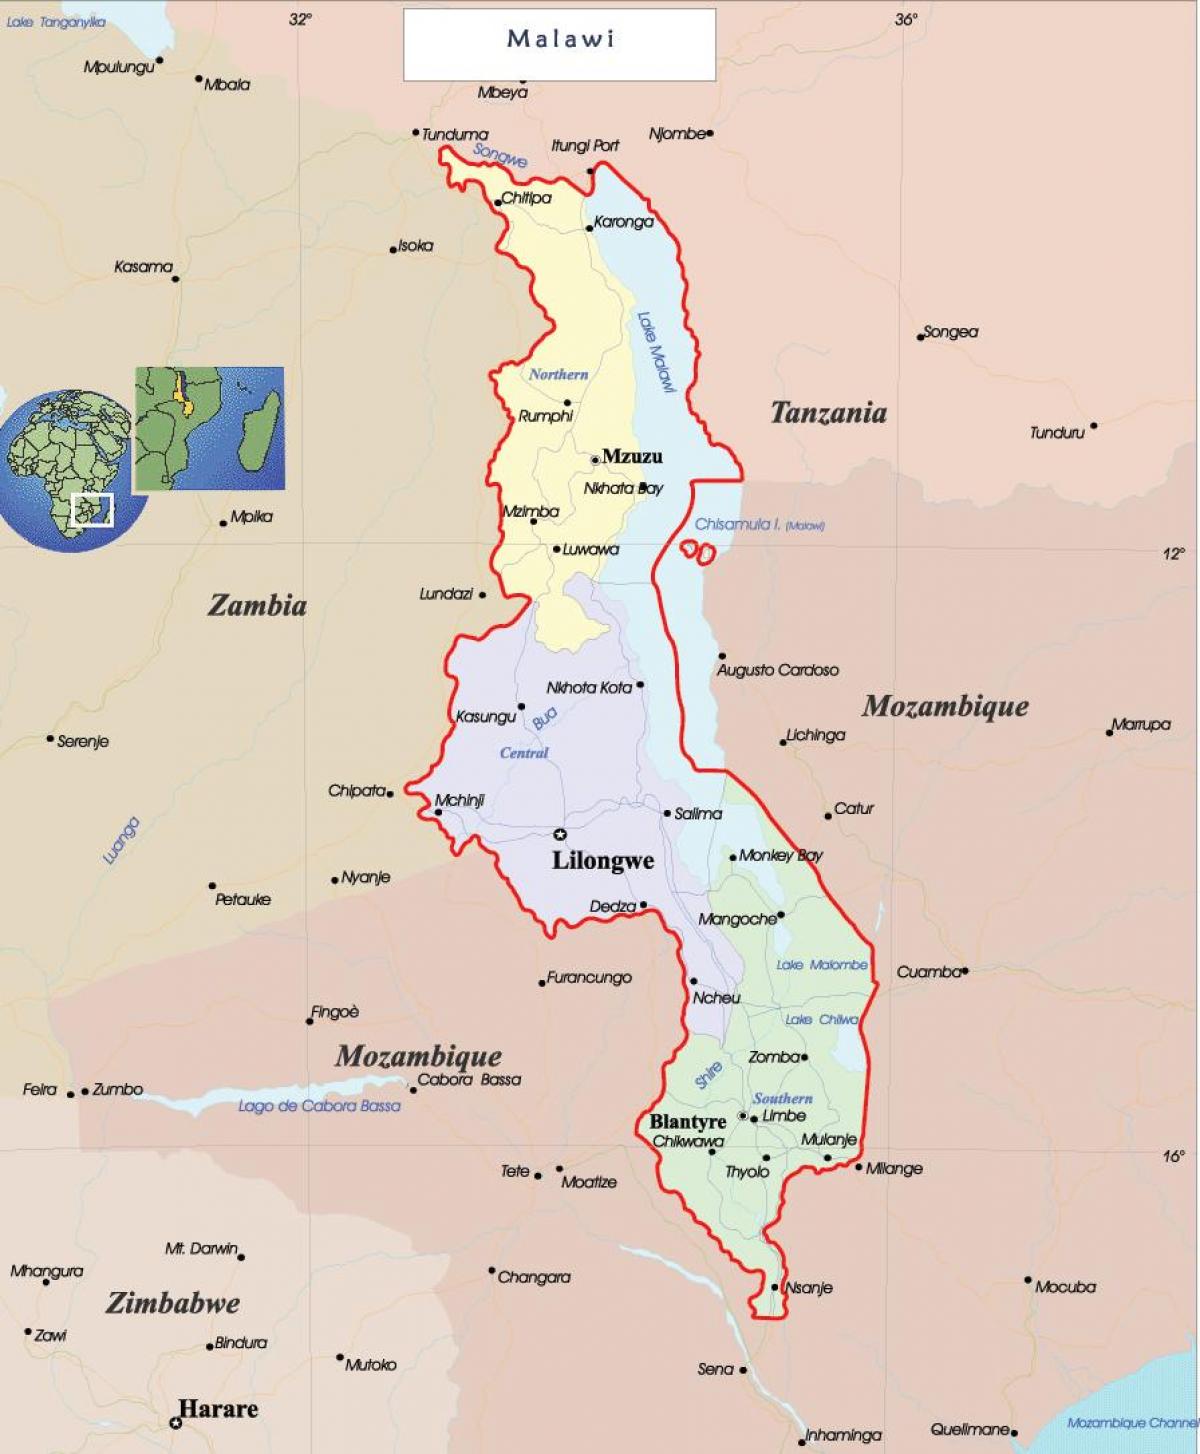 harta e Malavi politike